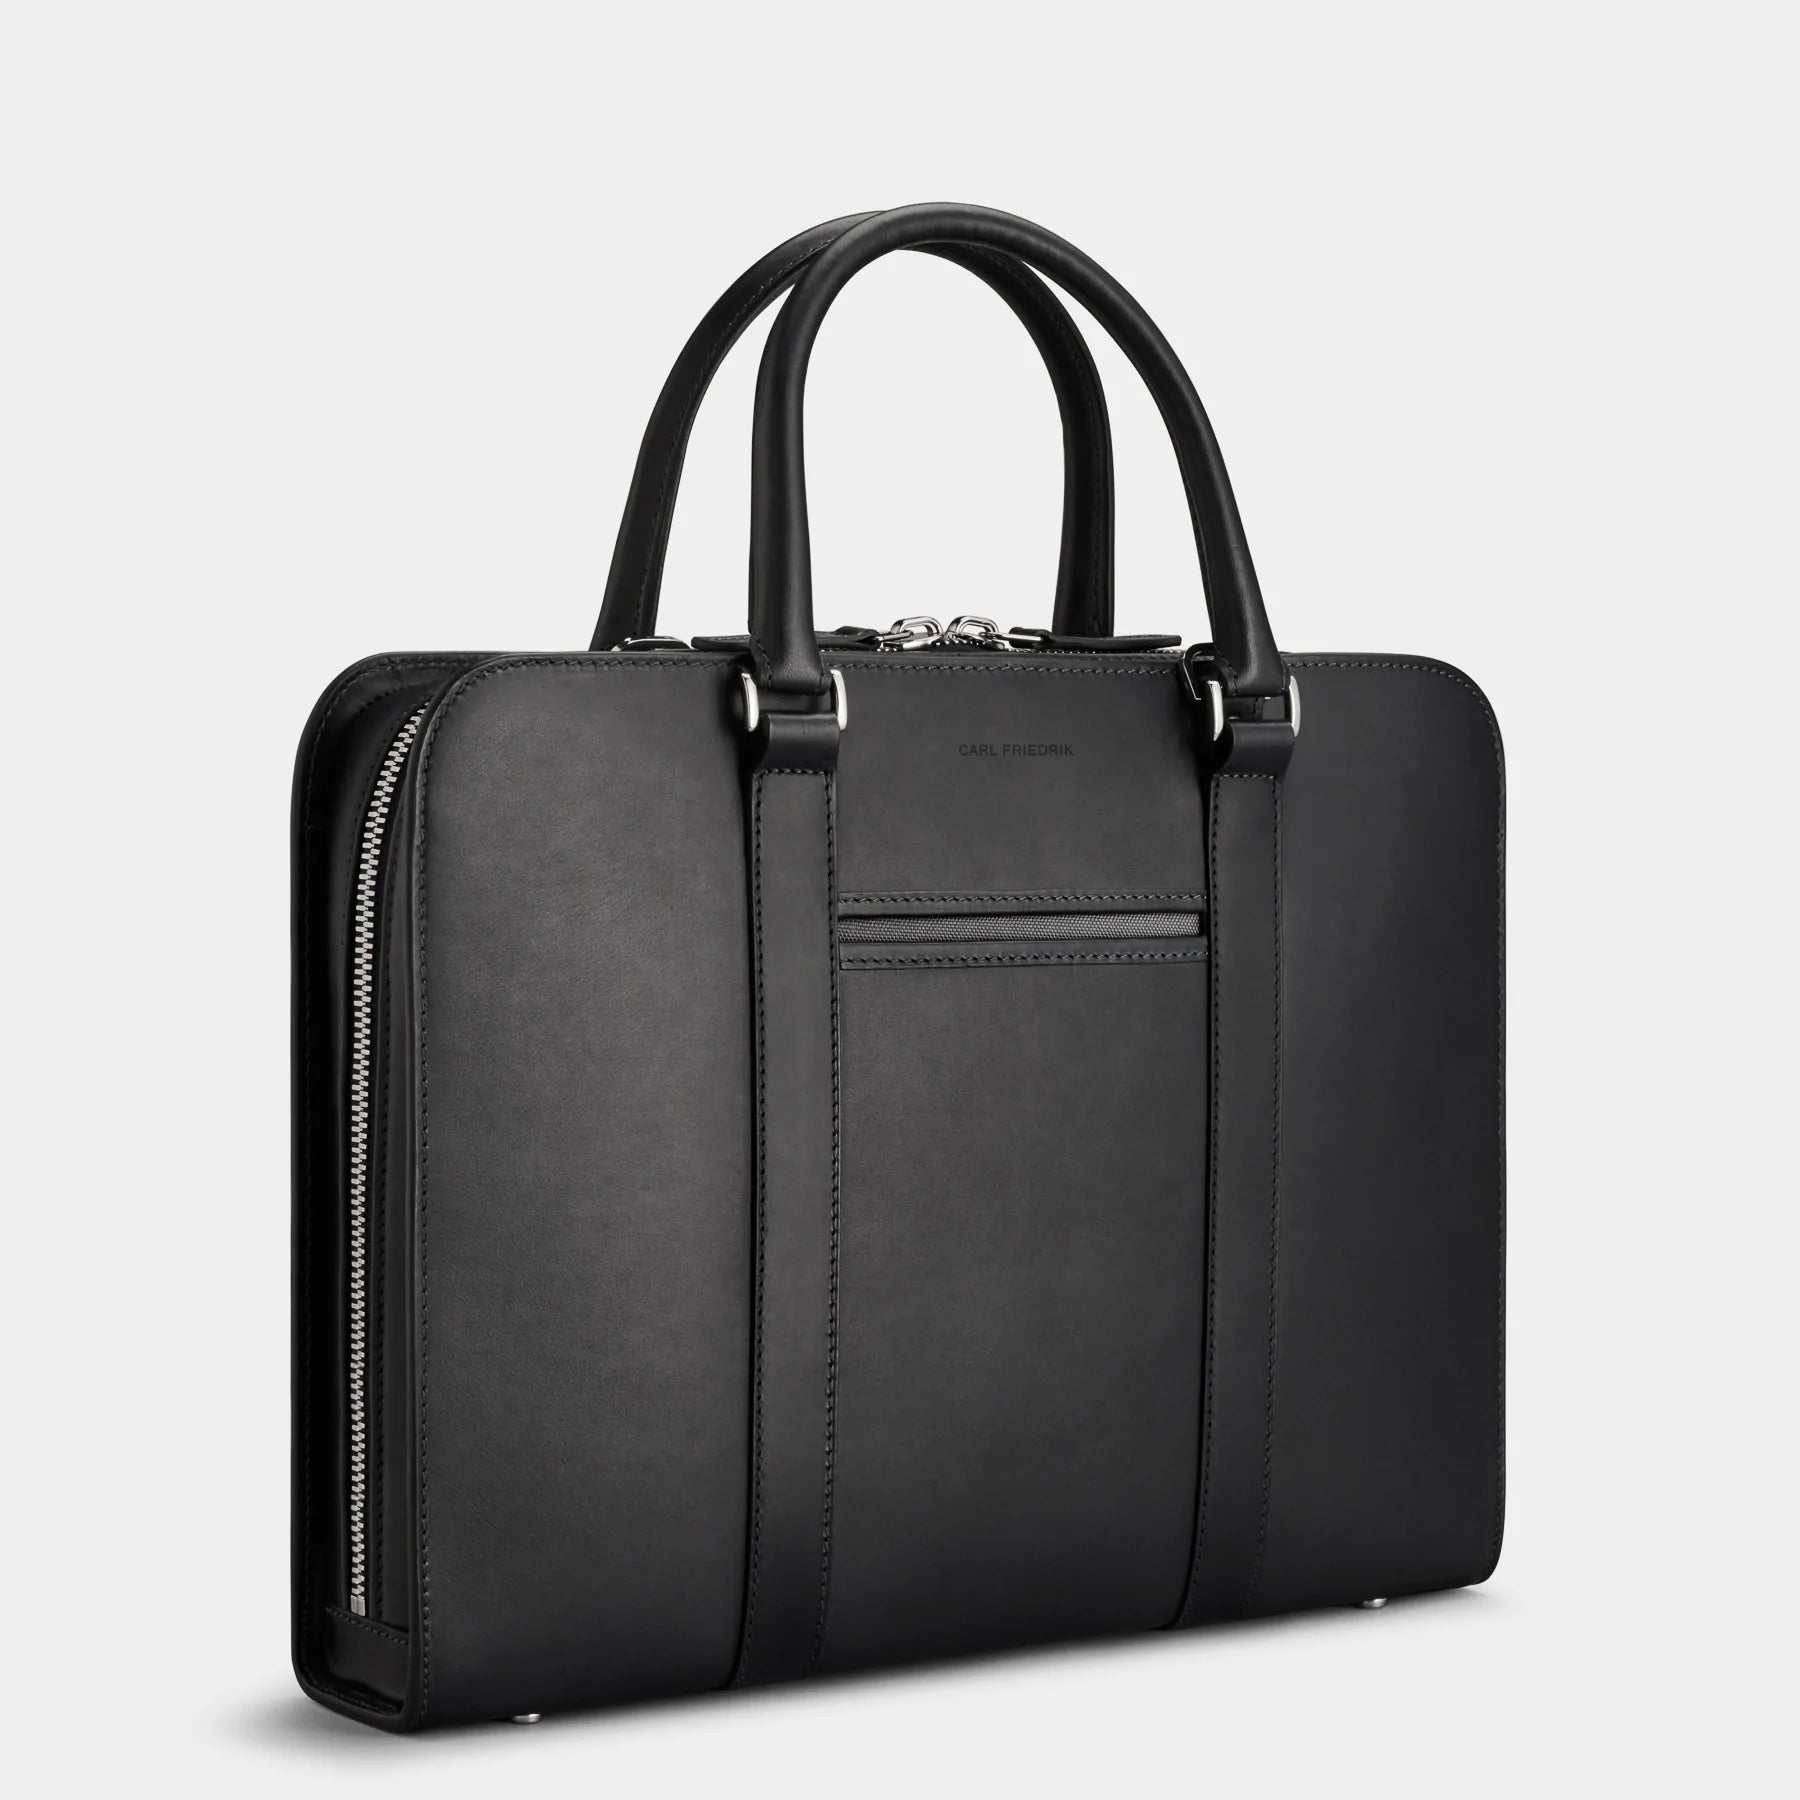 Palissy Briefcase - Sample Black Slim leather briefcase - Excellent Condition